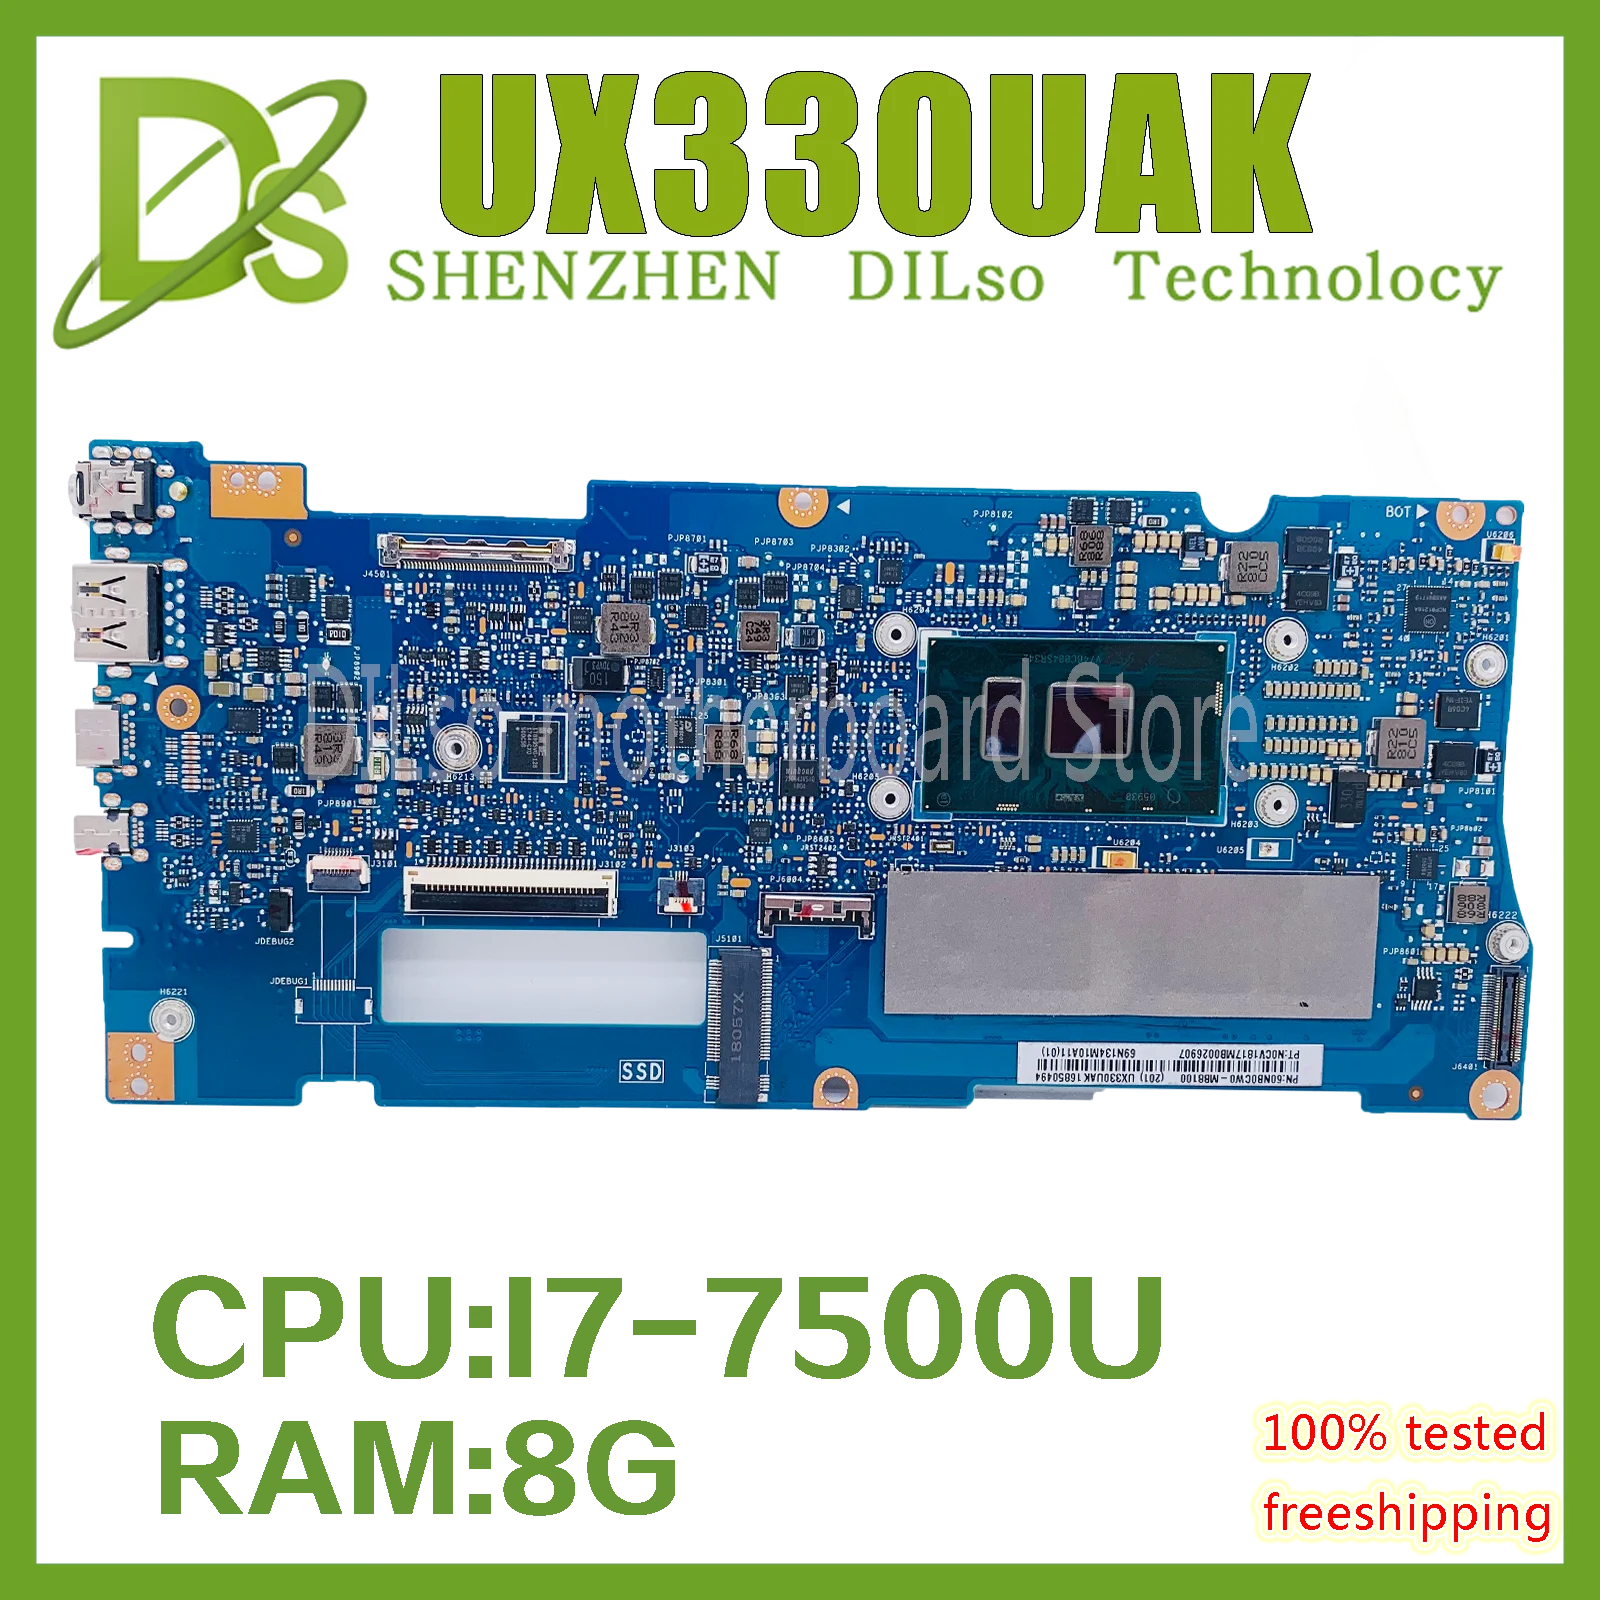 KEFU UX330UAK Motherboard for ASUS Zenbook UX330UA UX330UAR UX330U U3000U Motherboard With I7-7500U 8GB/RAM 100% Working Welll gaming pc motherboard cheap